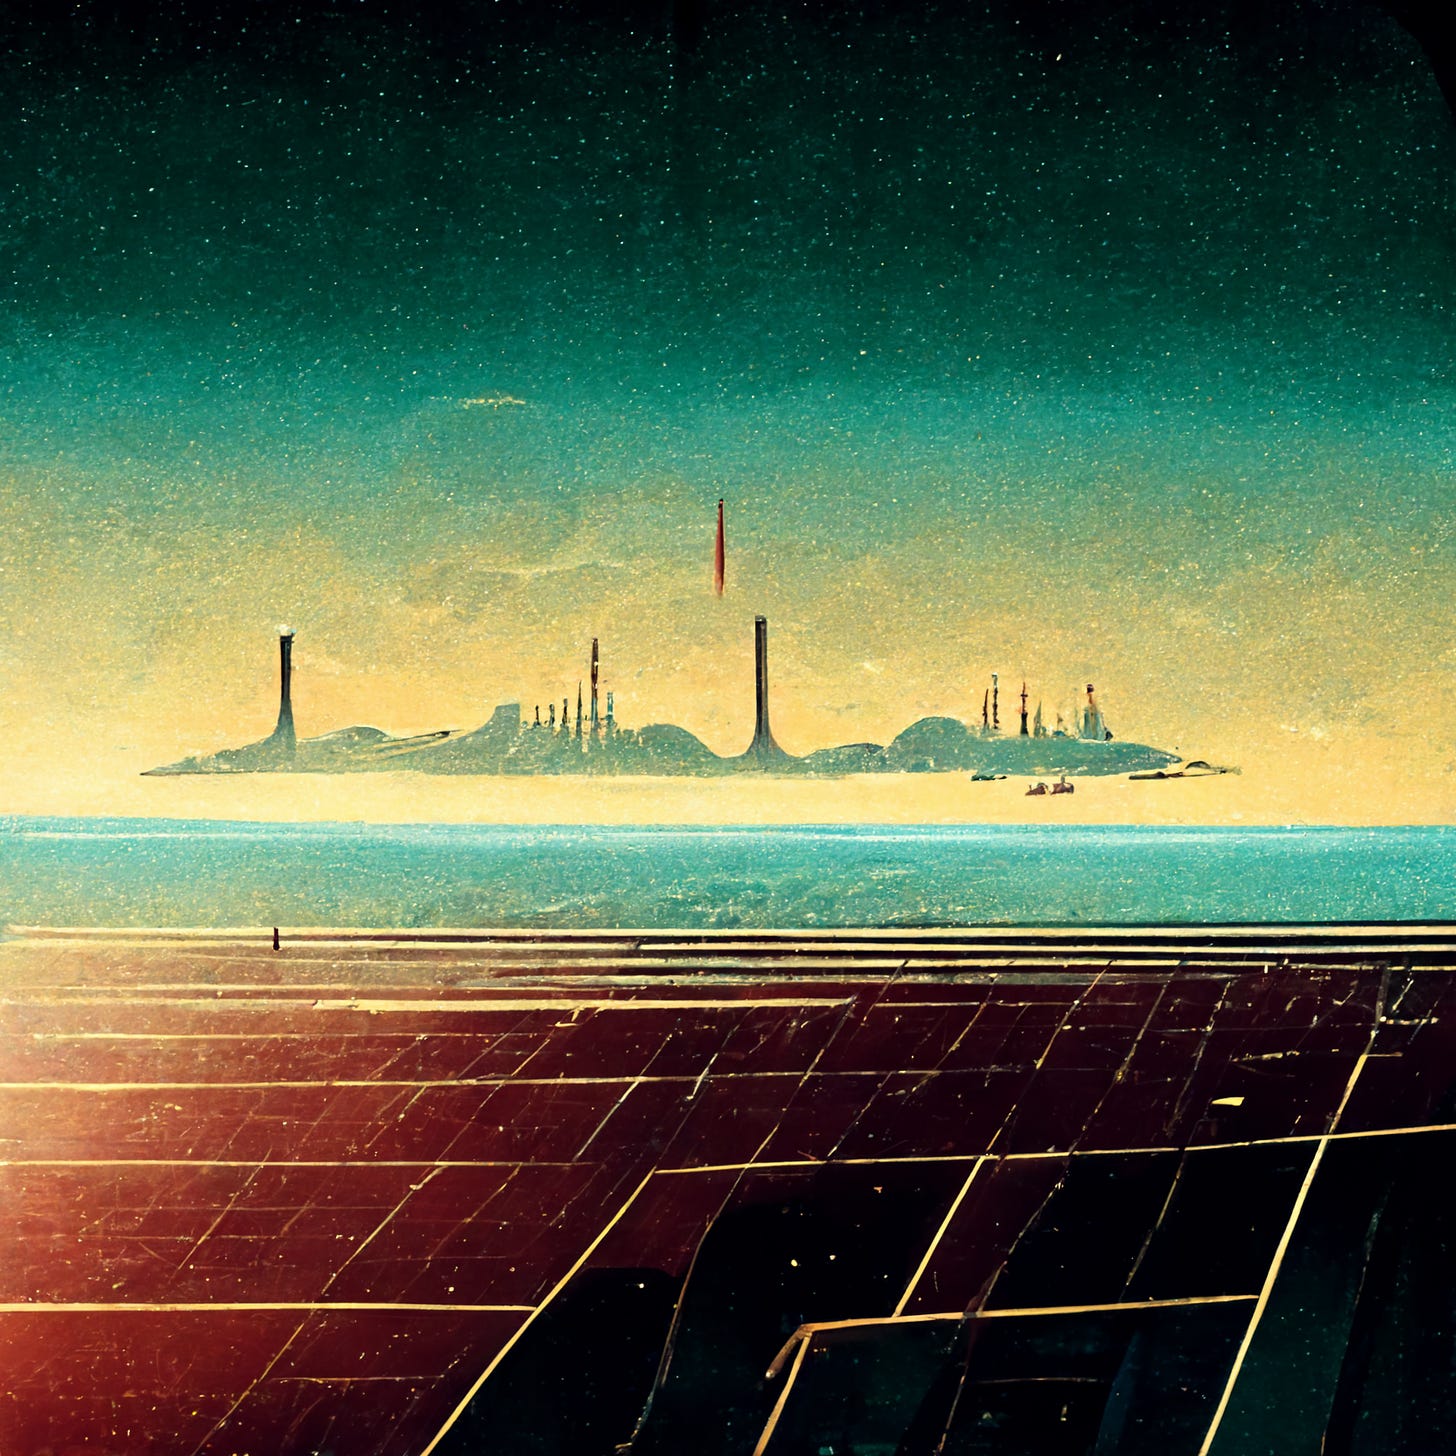 Peaceful world built around nuclear energy 80s style retrofuturism